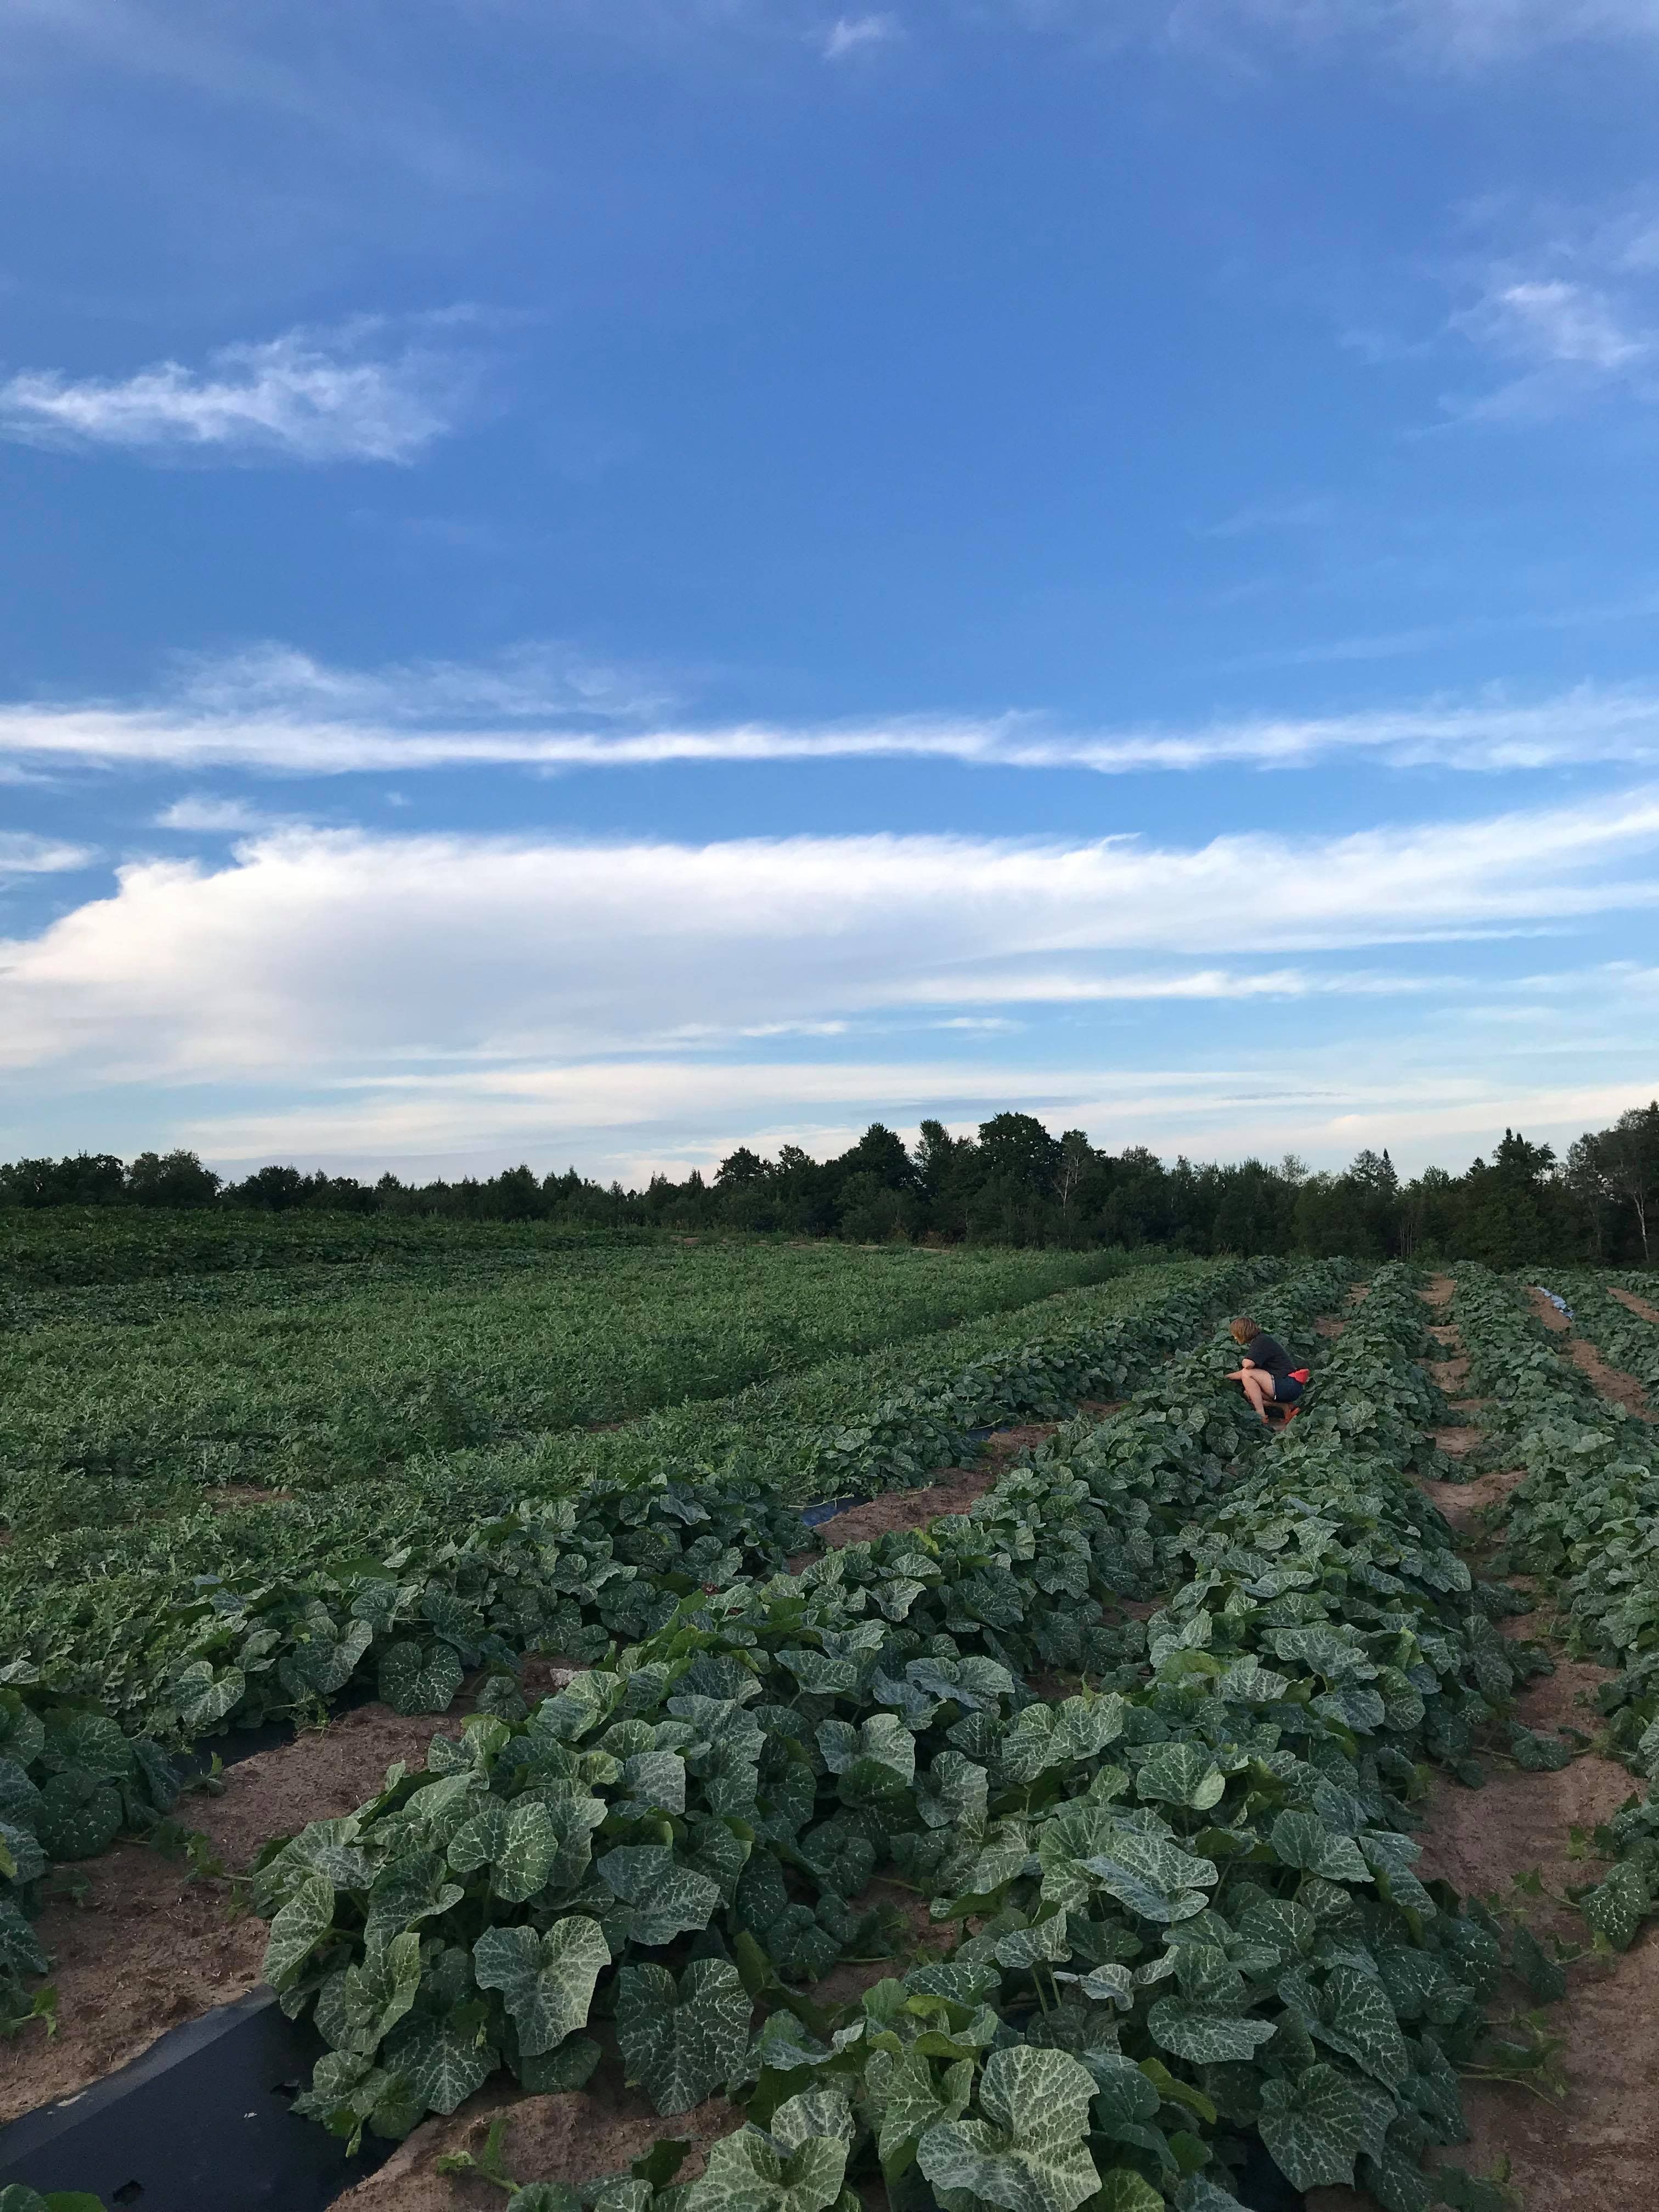 Previous Happening: Week 8 of 20; Summer 2020 Vegetable Share-Coopers CSA Farm Happenings